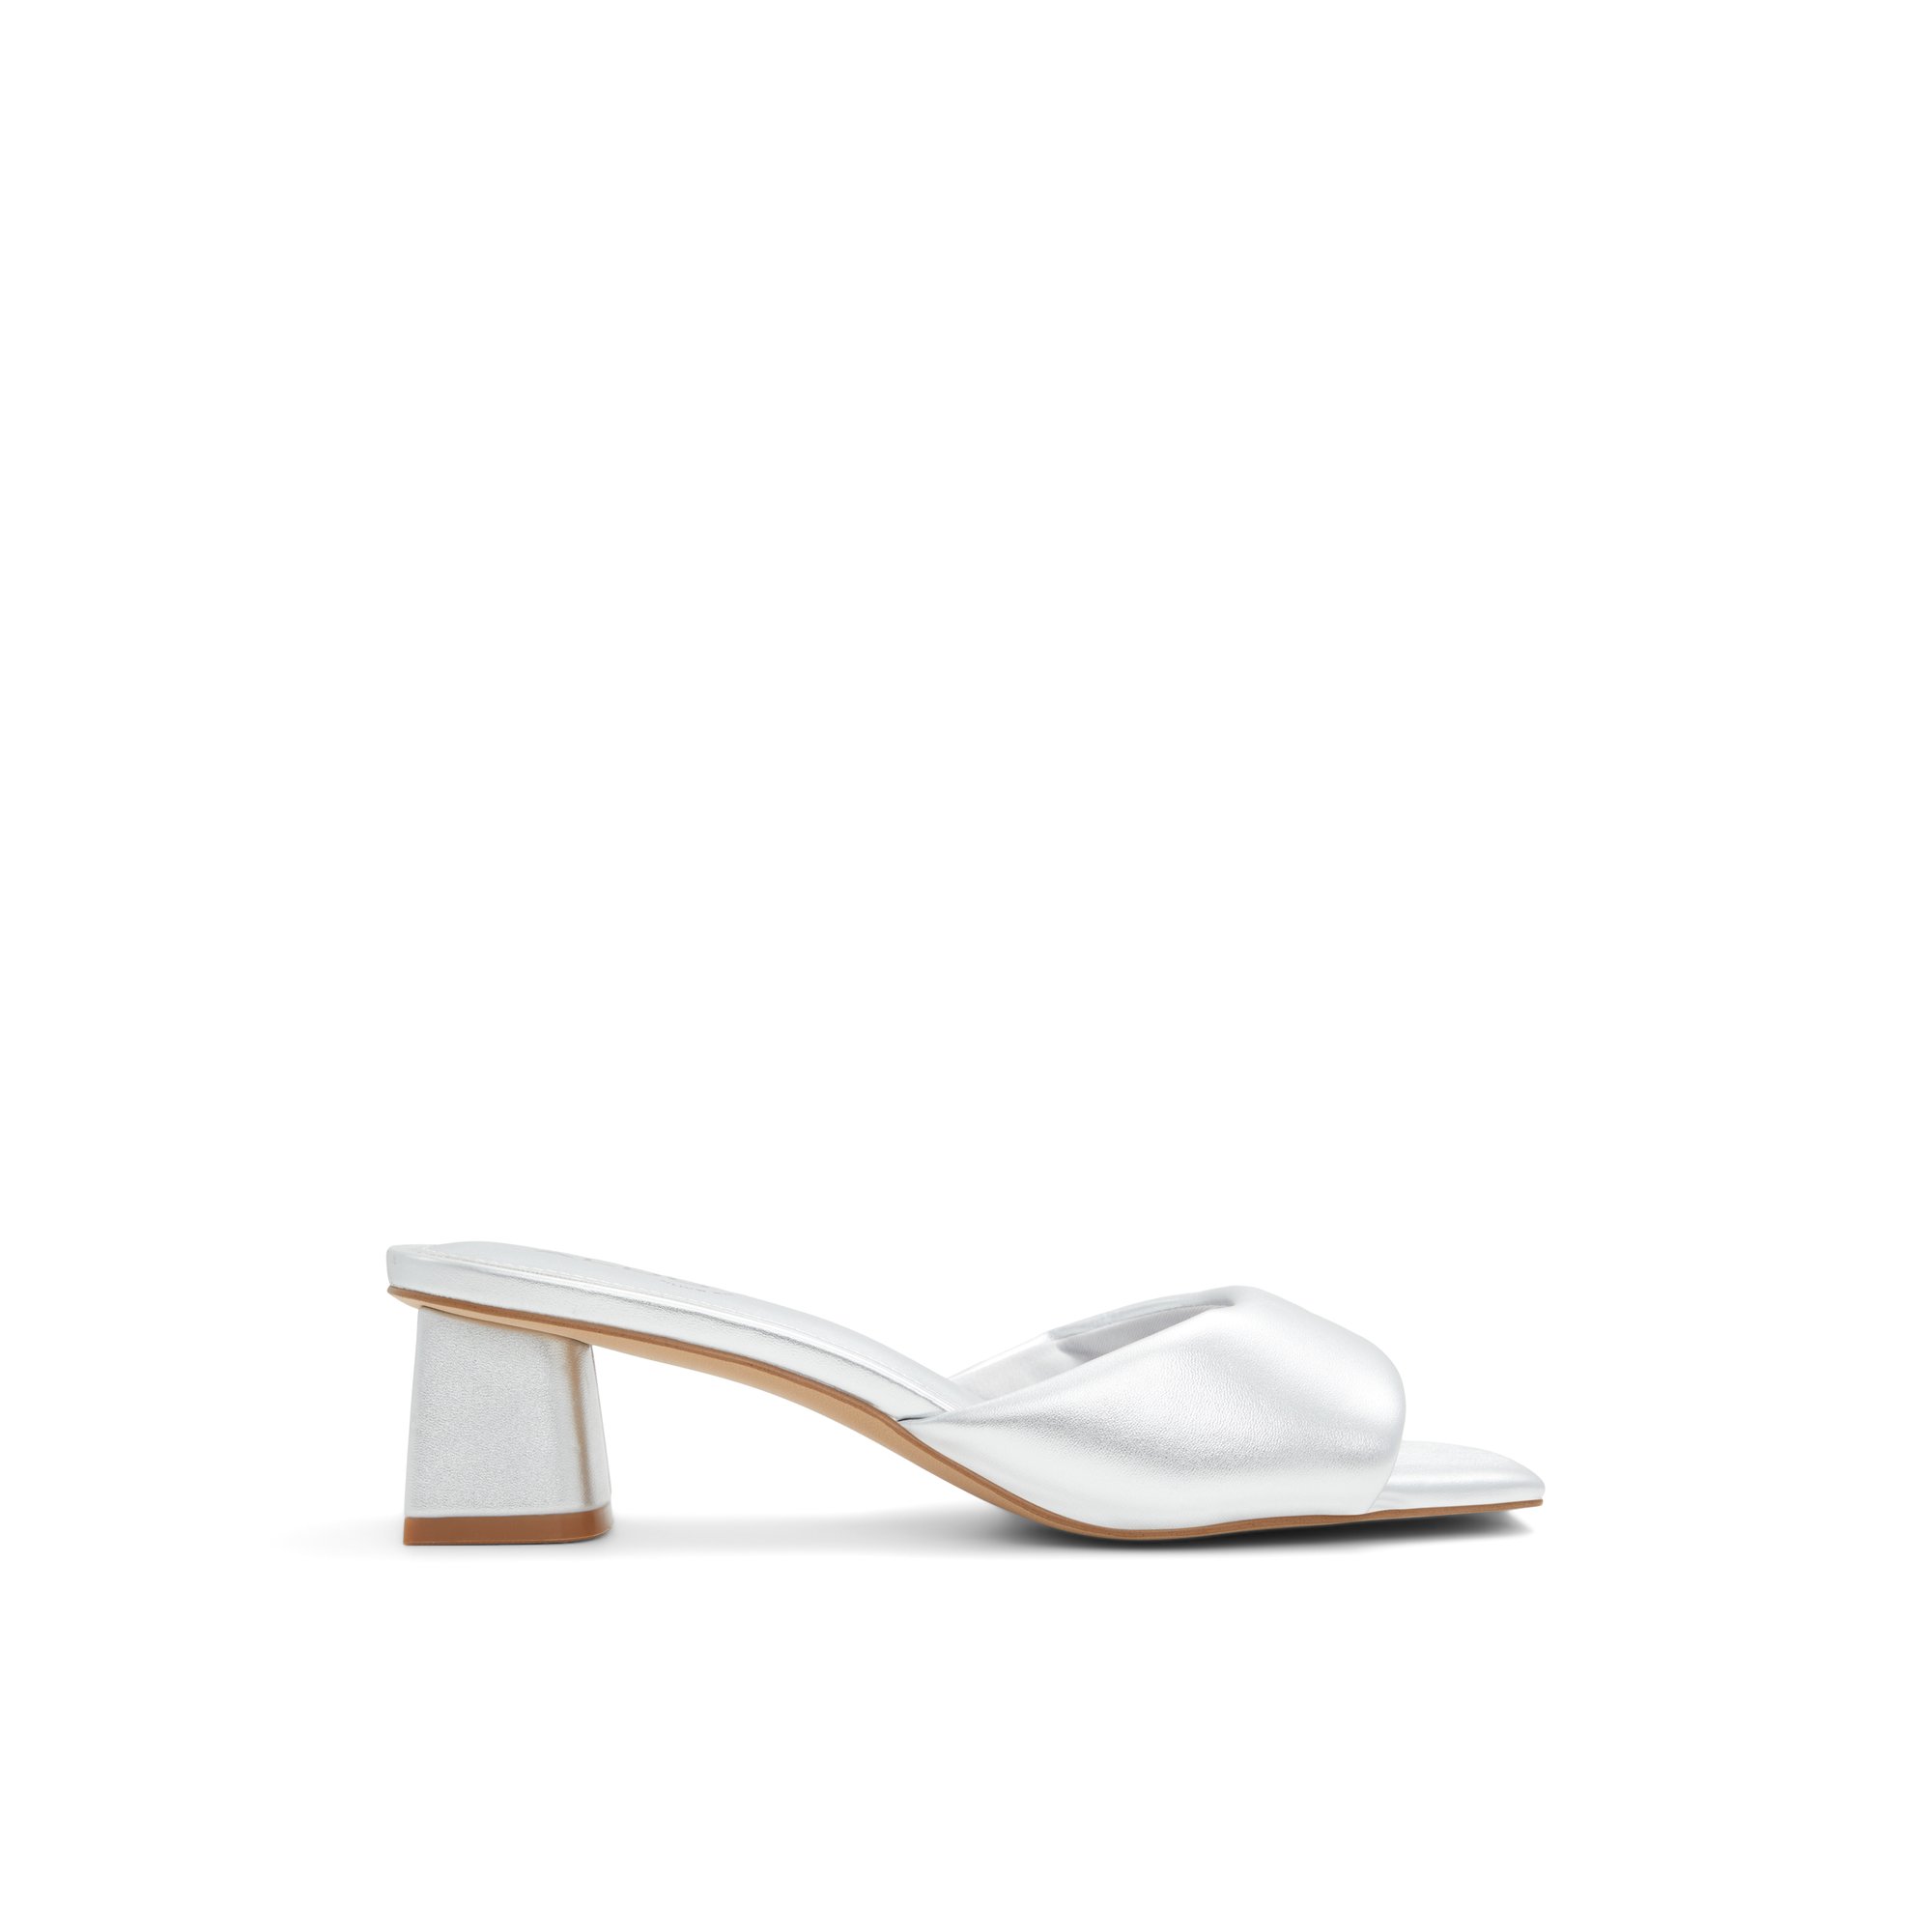 ALDO Aneka - Women's Heeled Mules Sandals - Silver